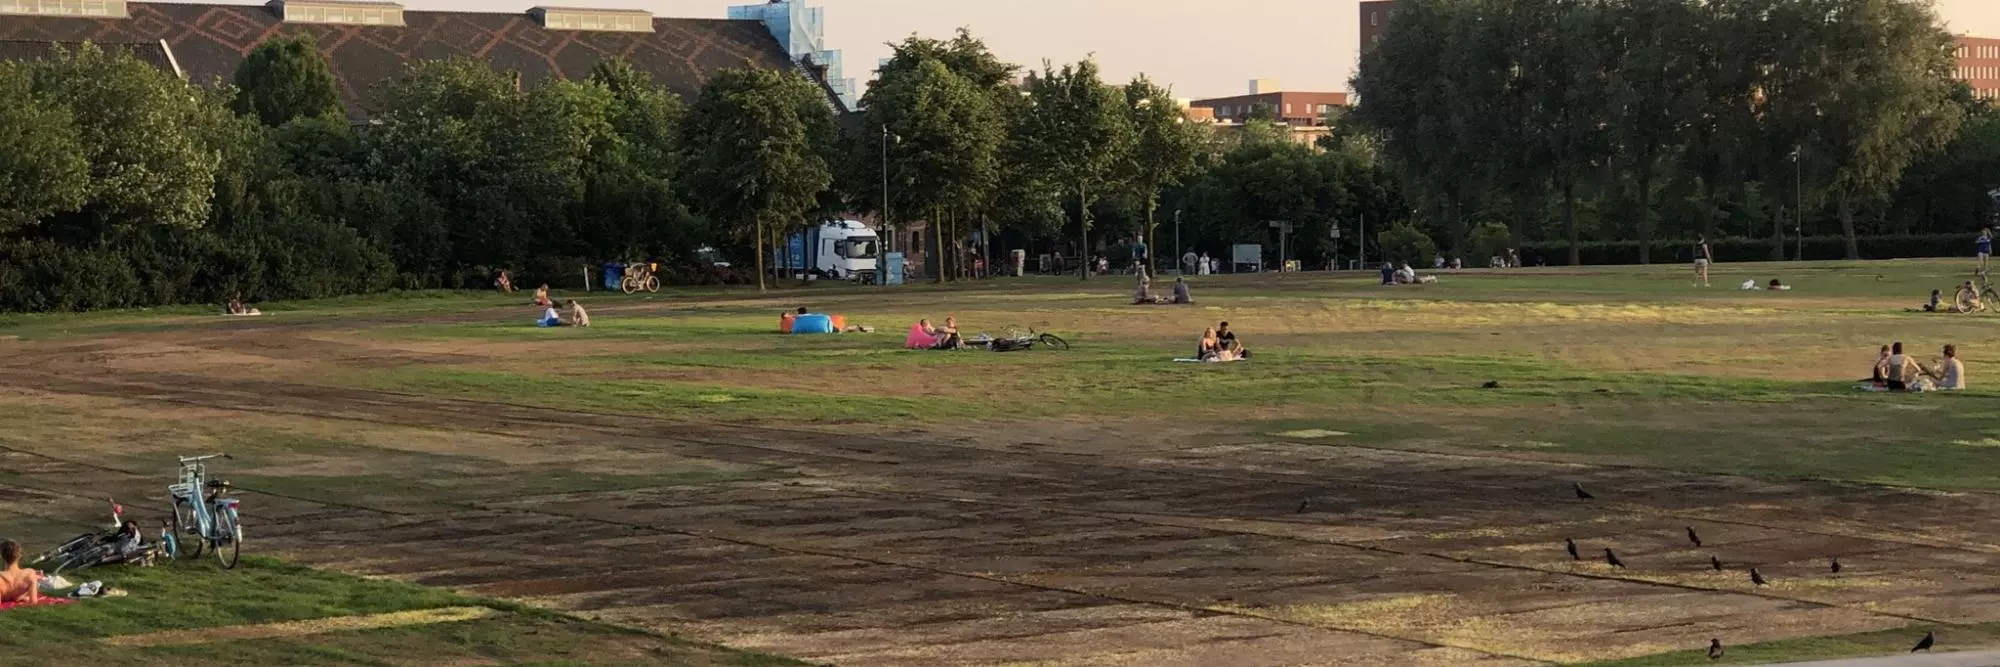 Vlonders op gras kapot park